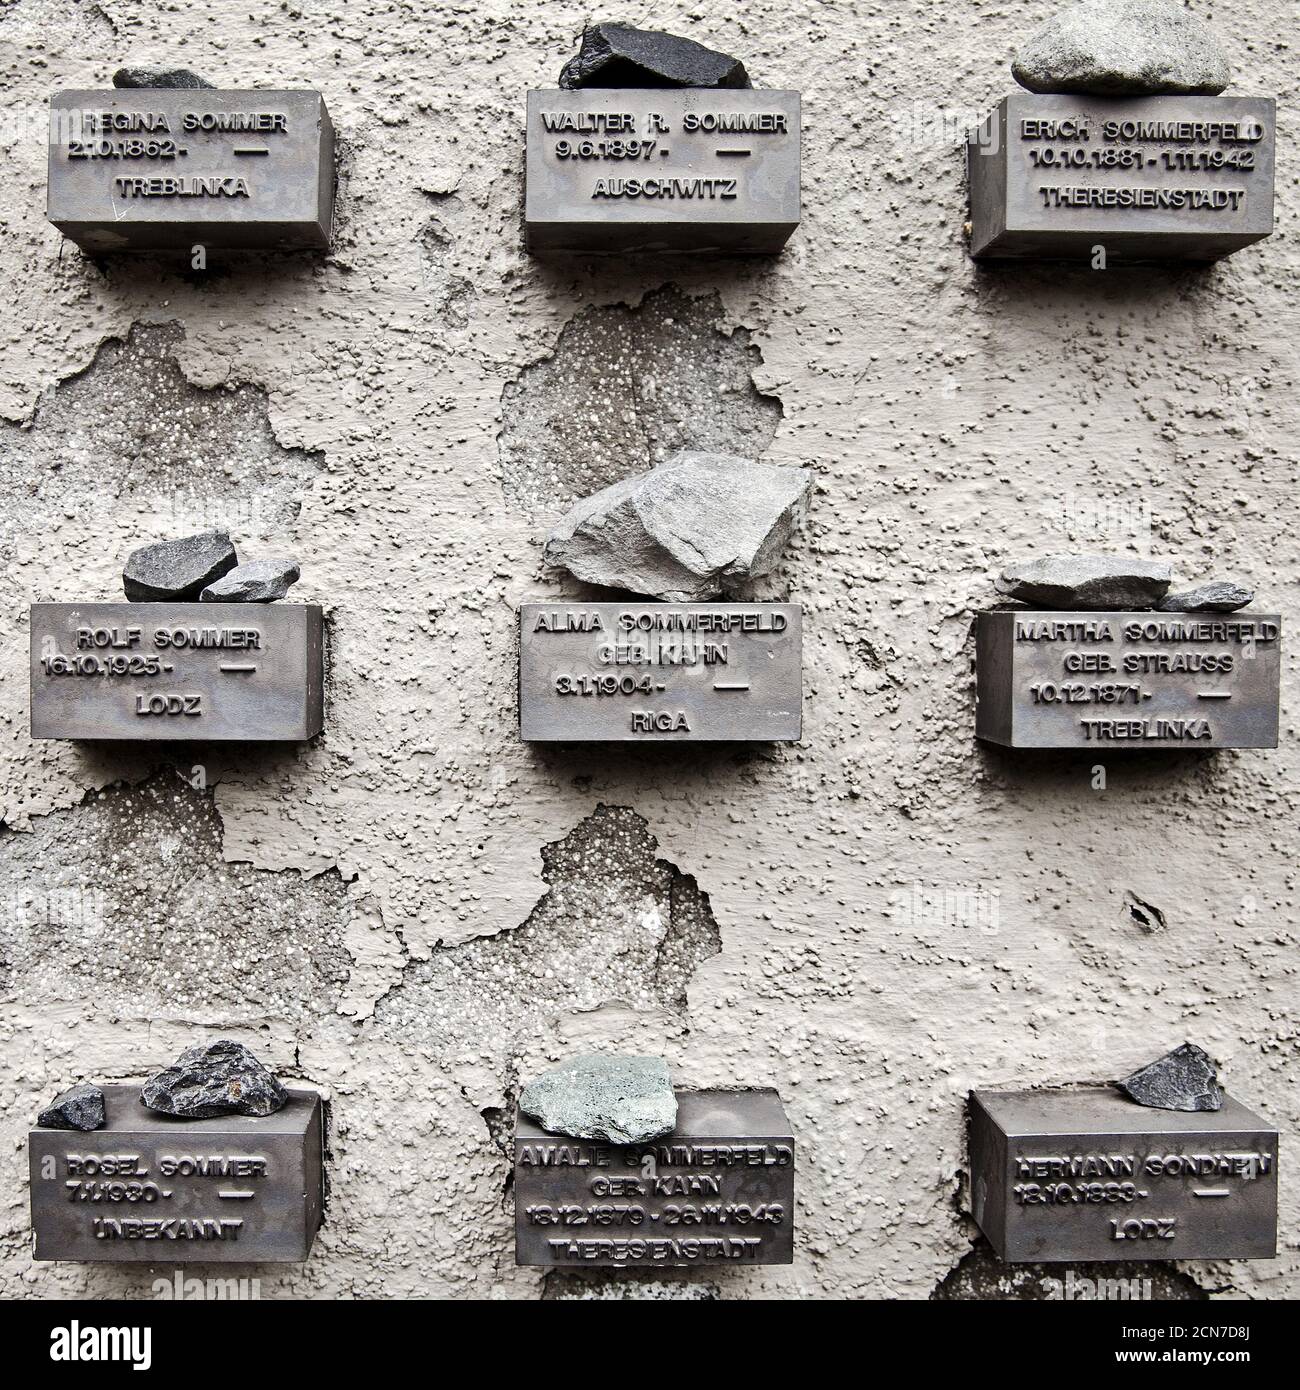 Memorial plaques for Frankfurt Jews, Jewish Cemetery Battonnstrasse, Frankfurt, Germany, Europe Stock Photo